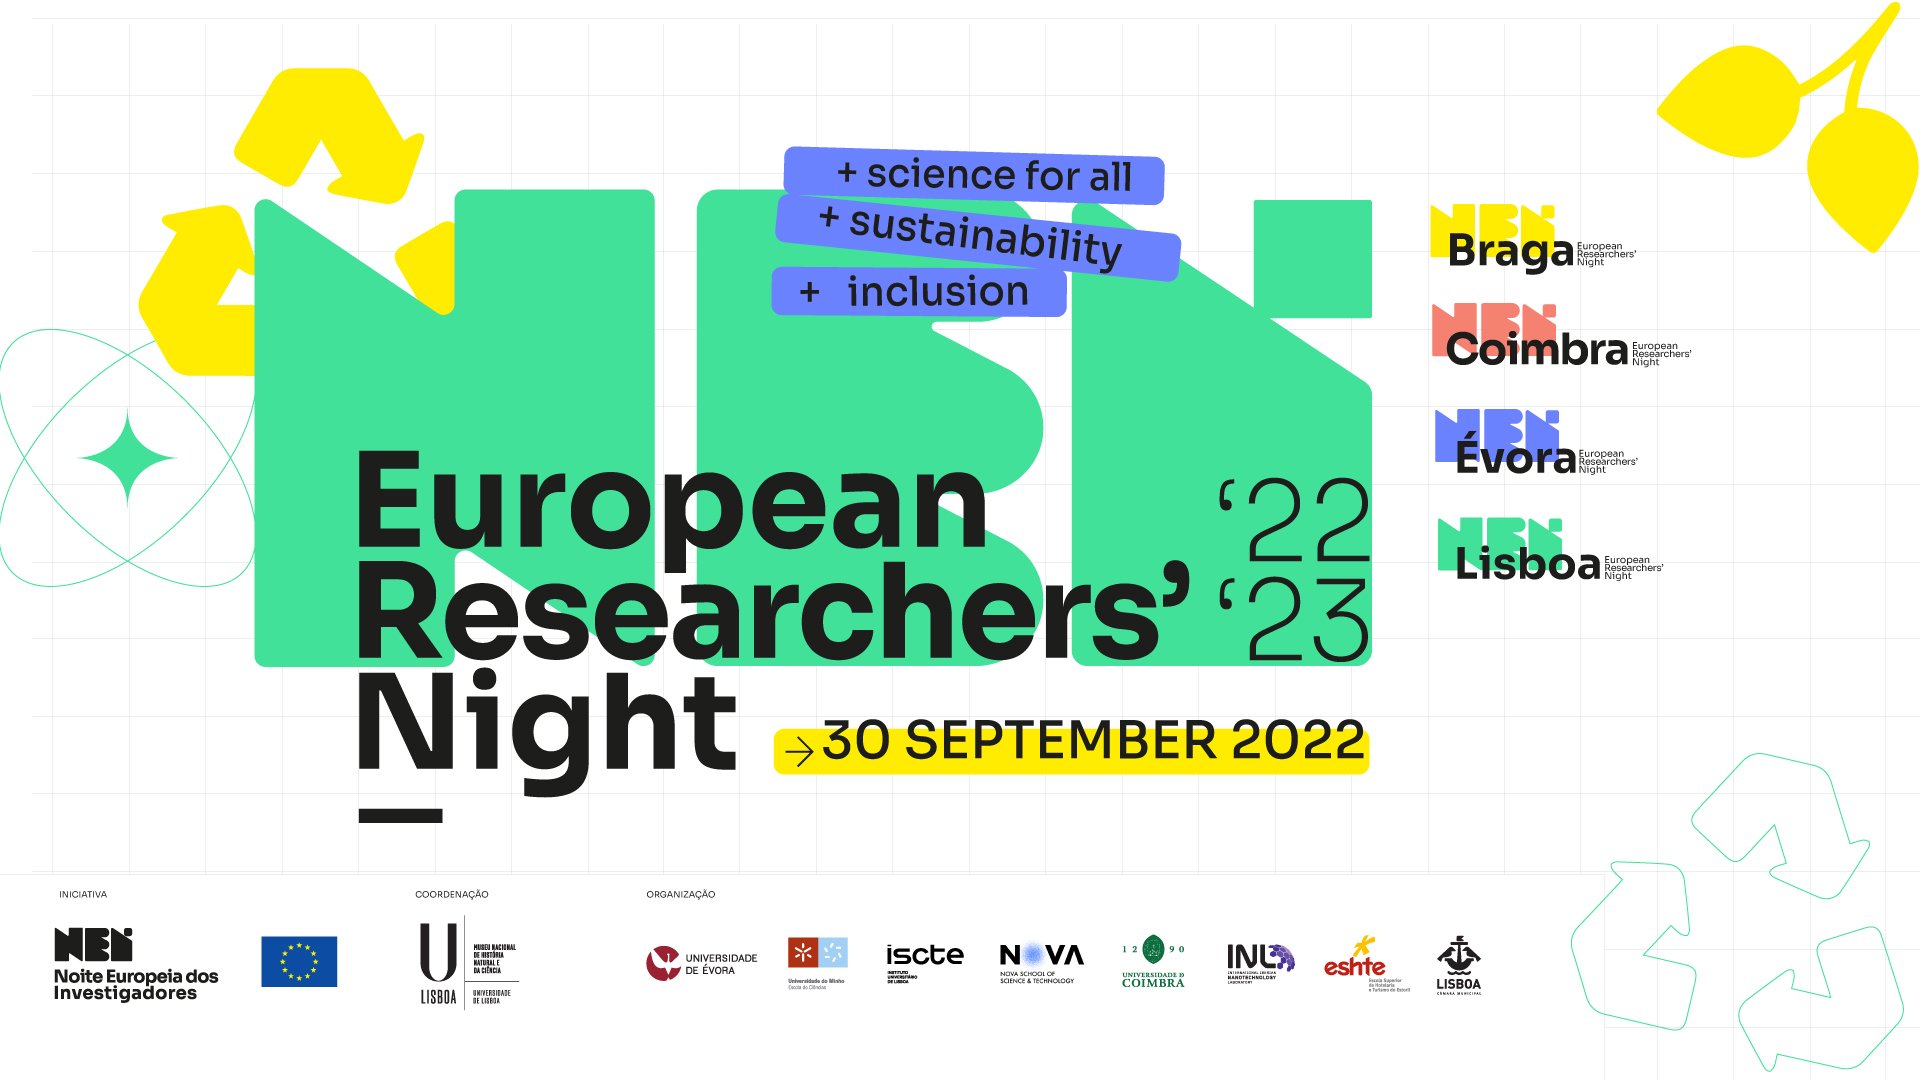 European Researchers’ Night returns next week to Braga